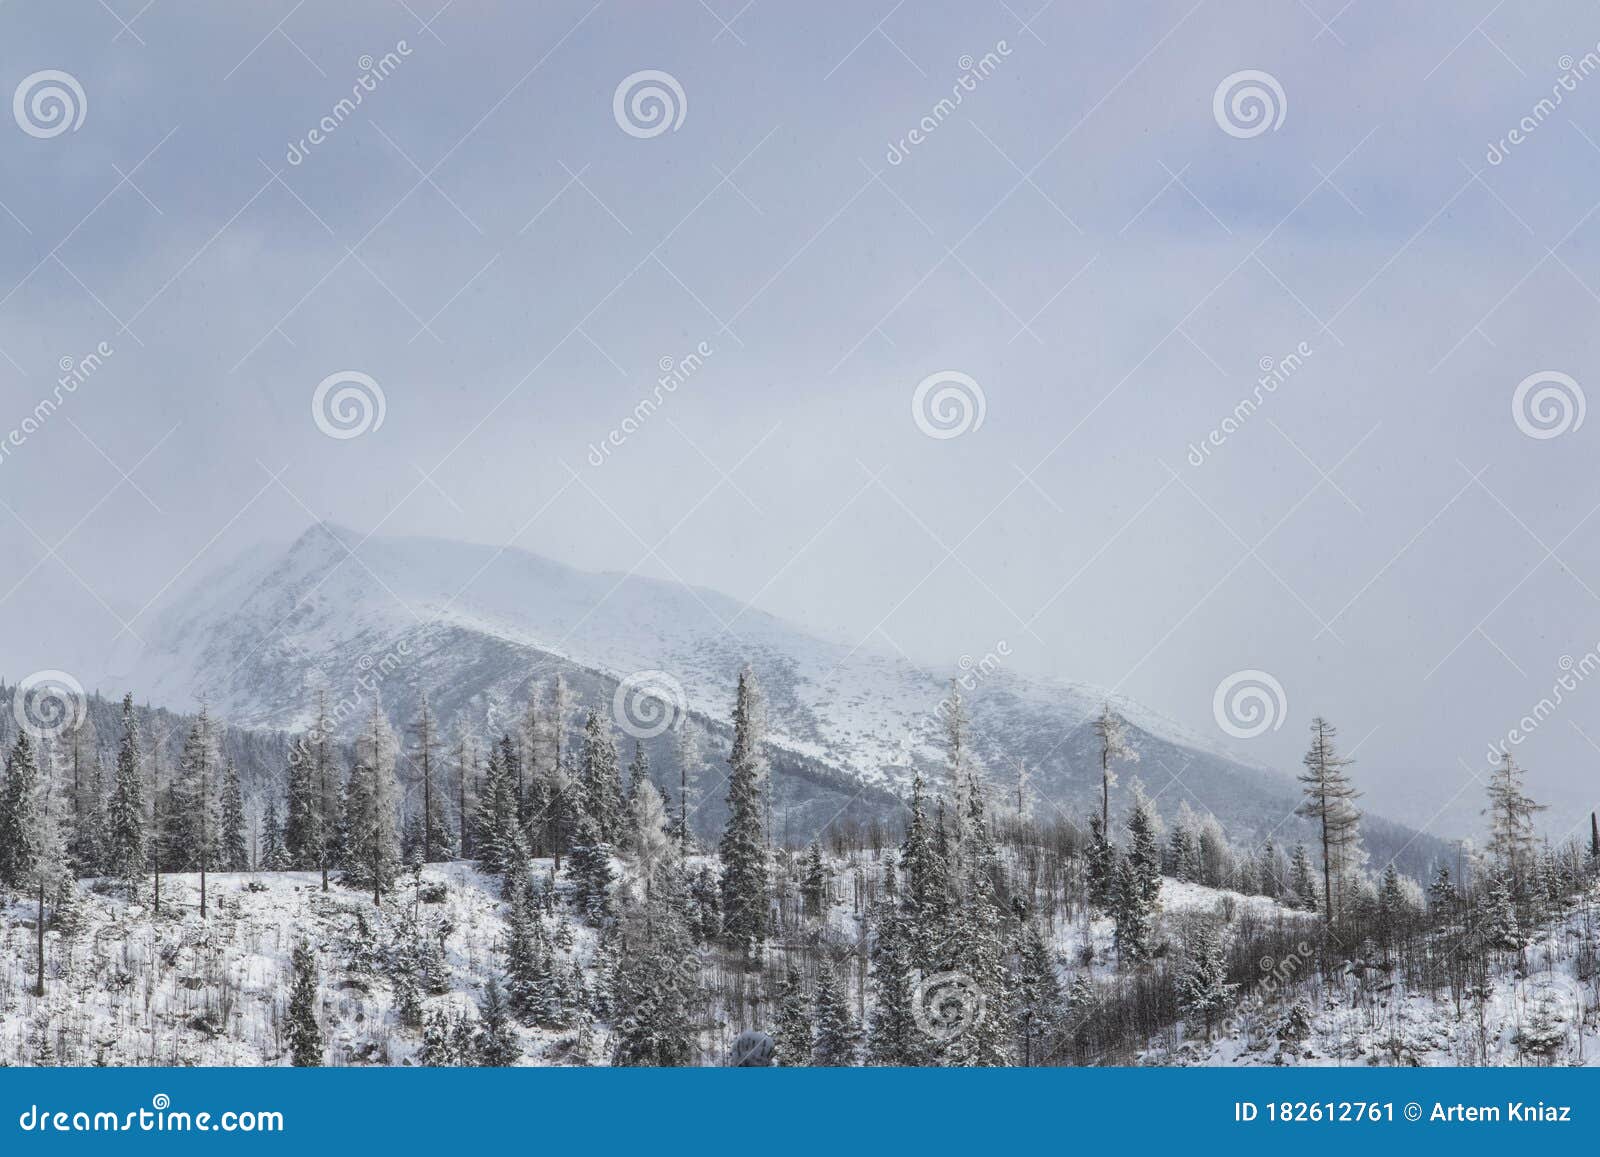 Calm Winter Nature Landscape Wood Land Scenic View Alps Mountain ...